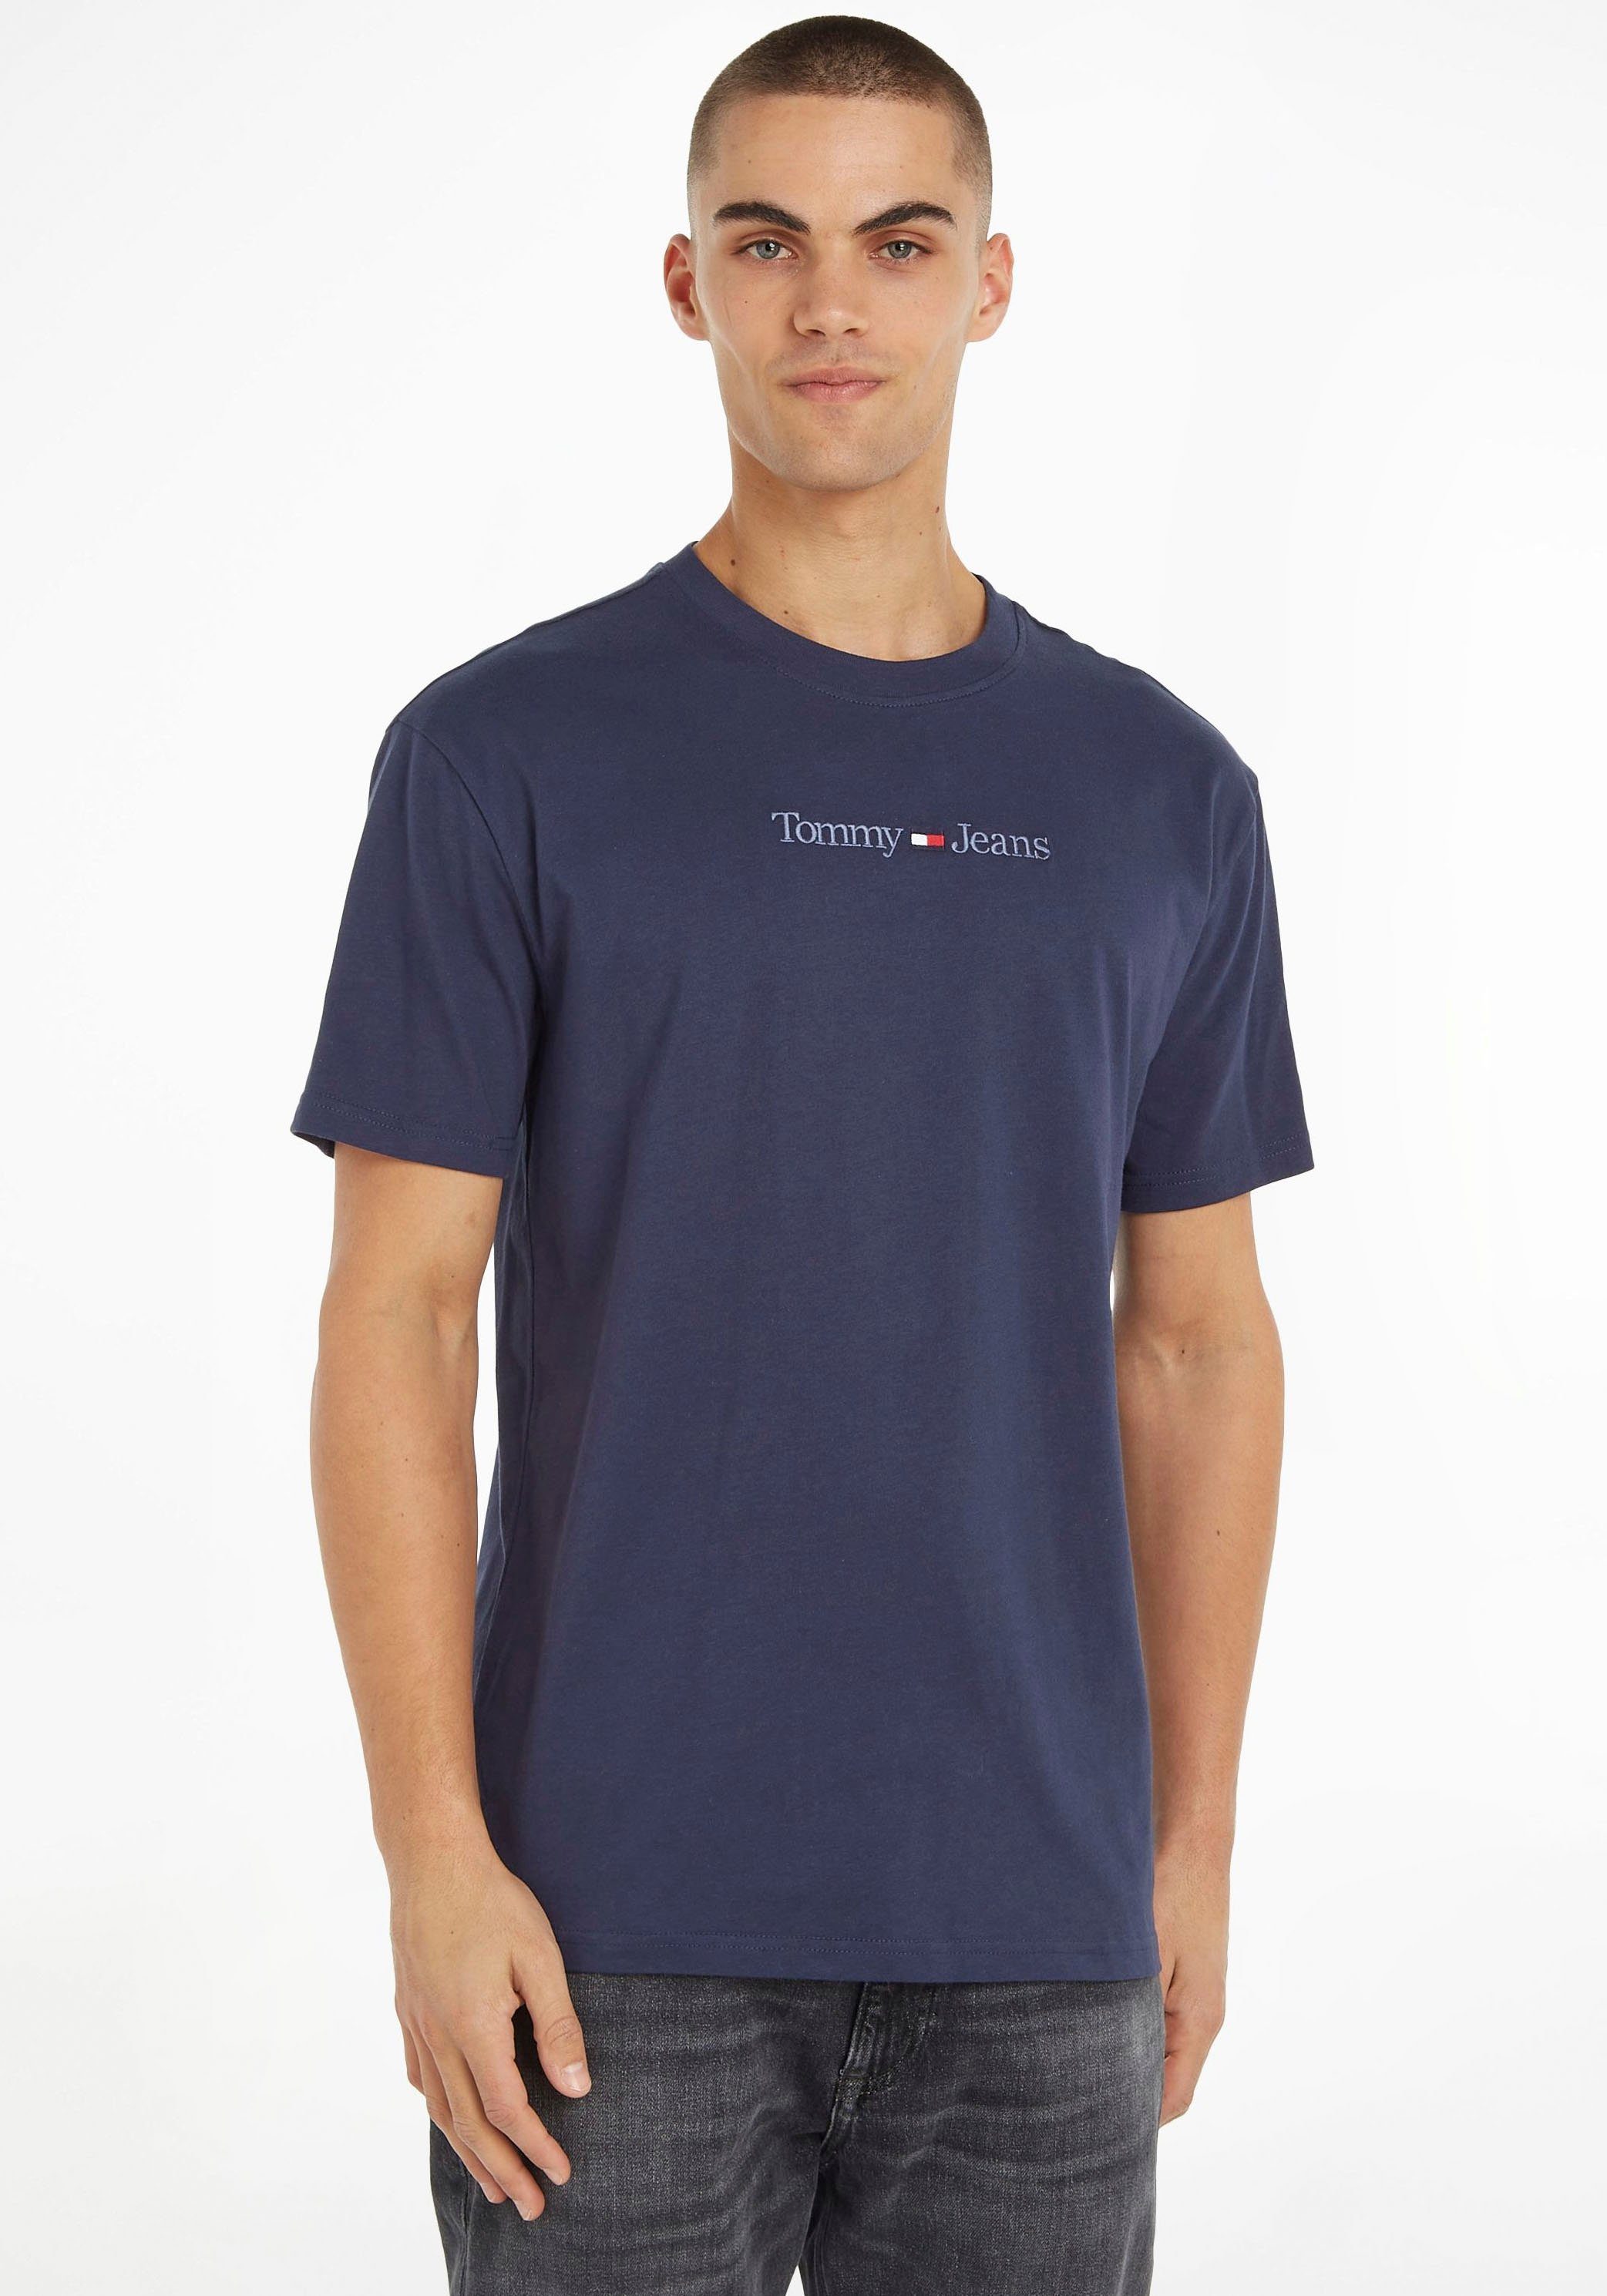 Jeans T-Shirt Navy CLSC TEXT TJM Twilight TEE Tommy SMALL